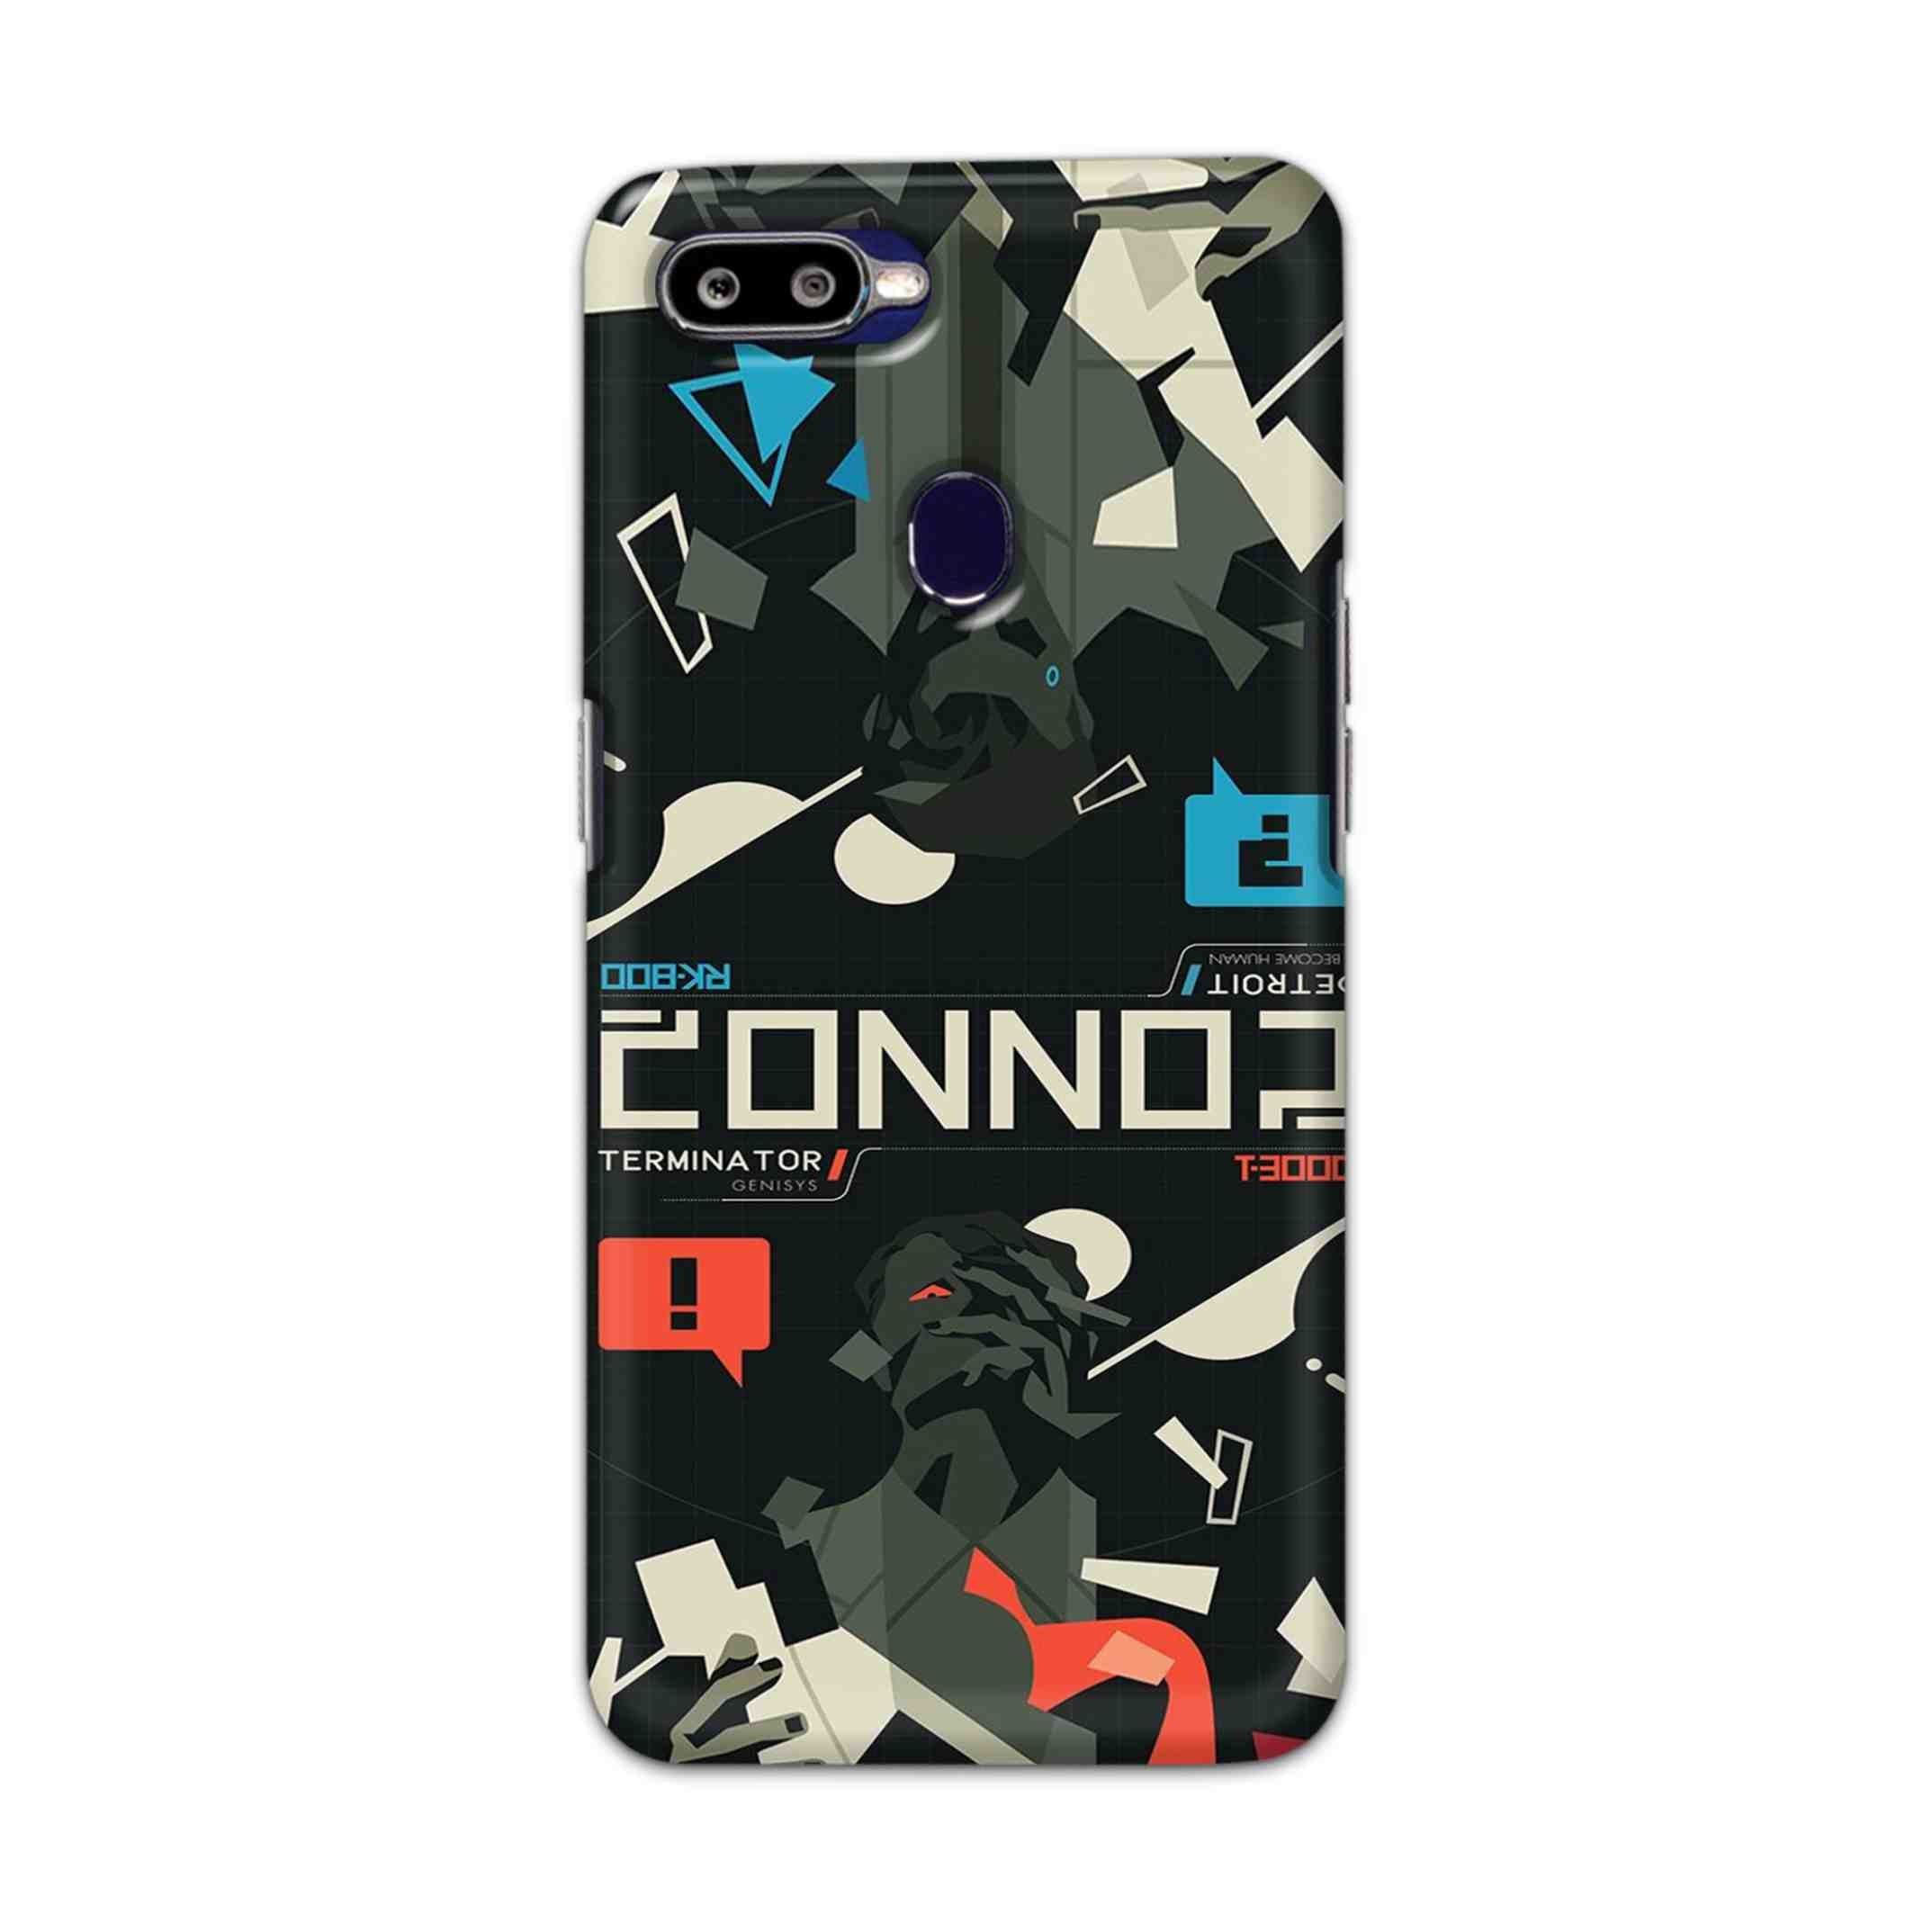 Buy Terminator Hard Back Mobile Phone Case/Cover For Oppo F9 / F9 Pro Online